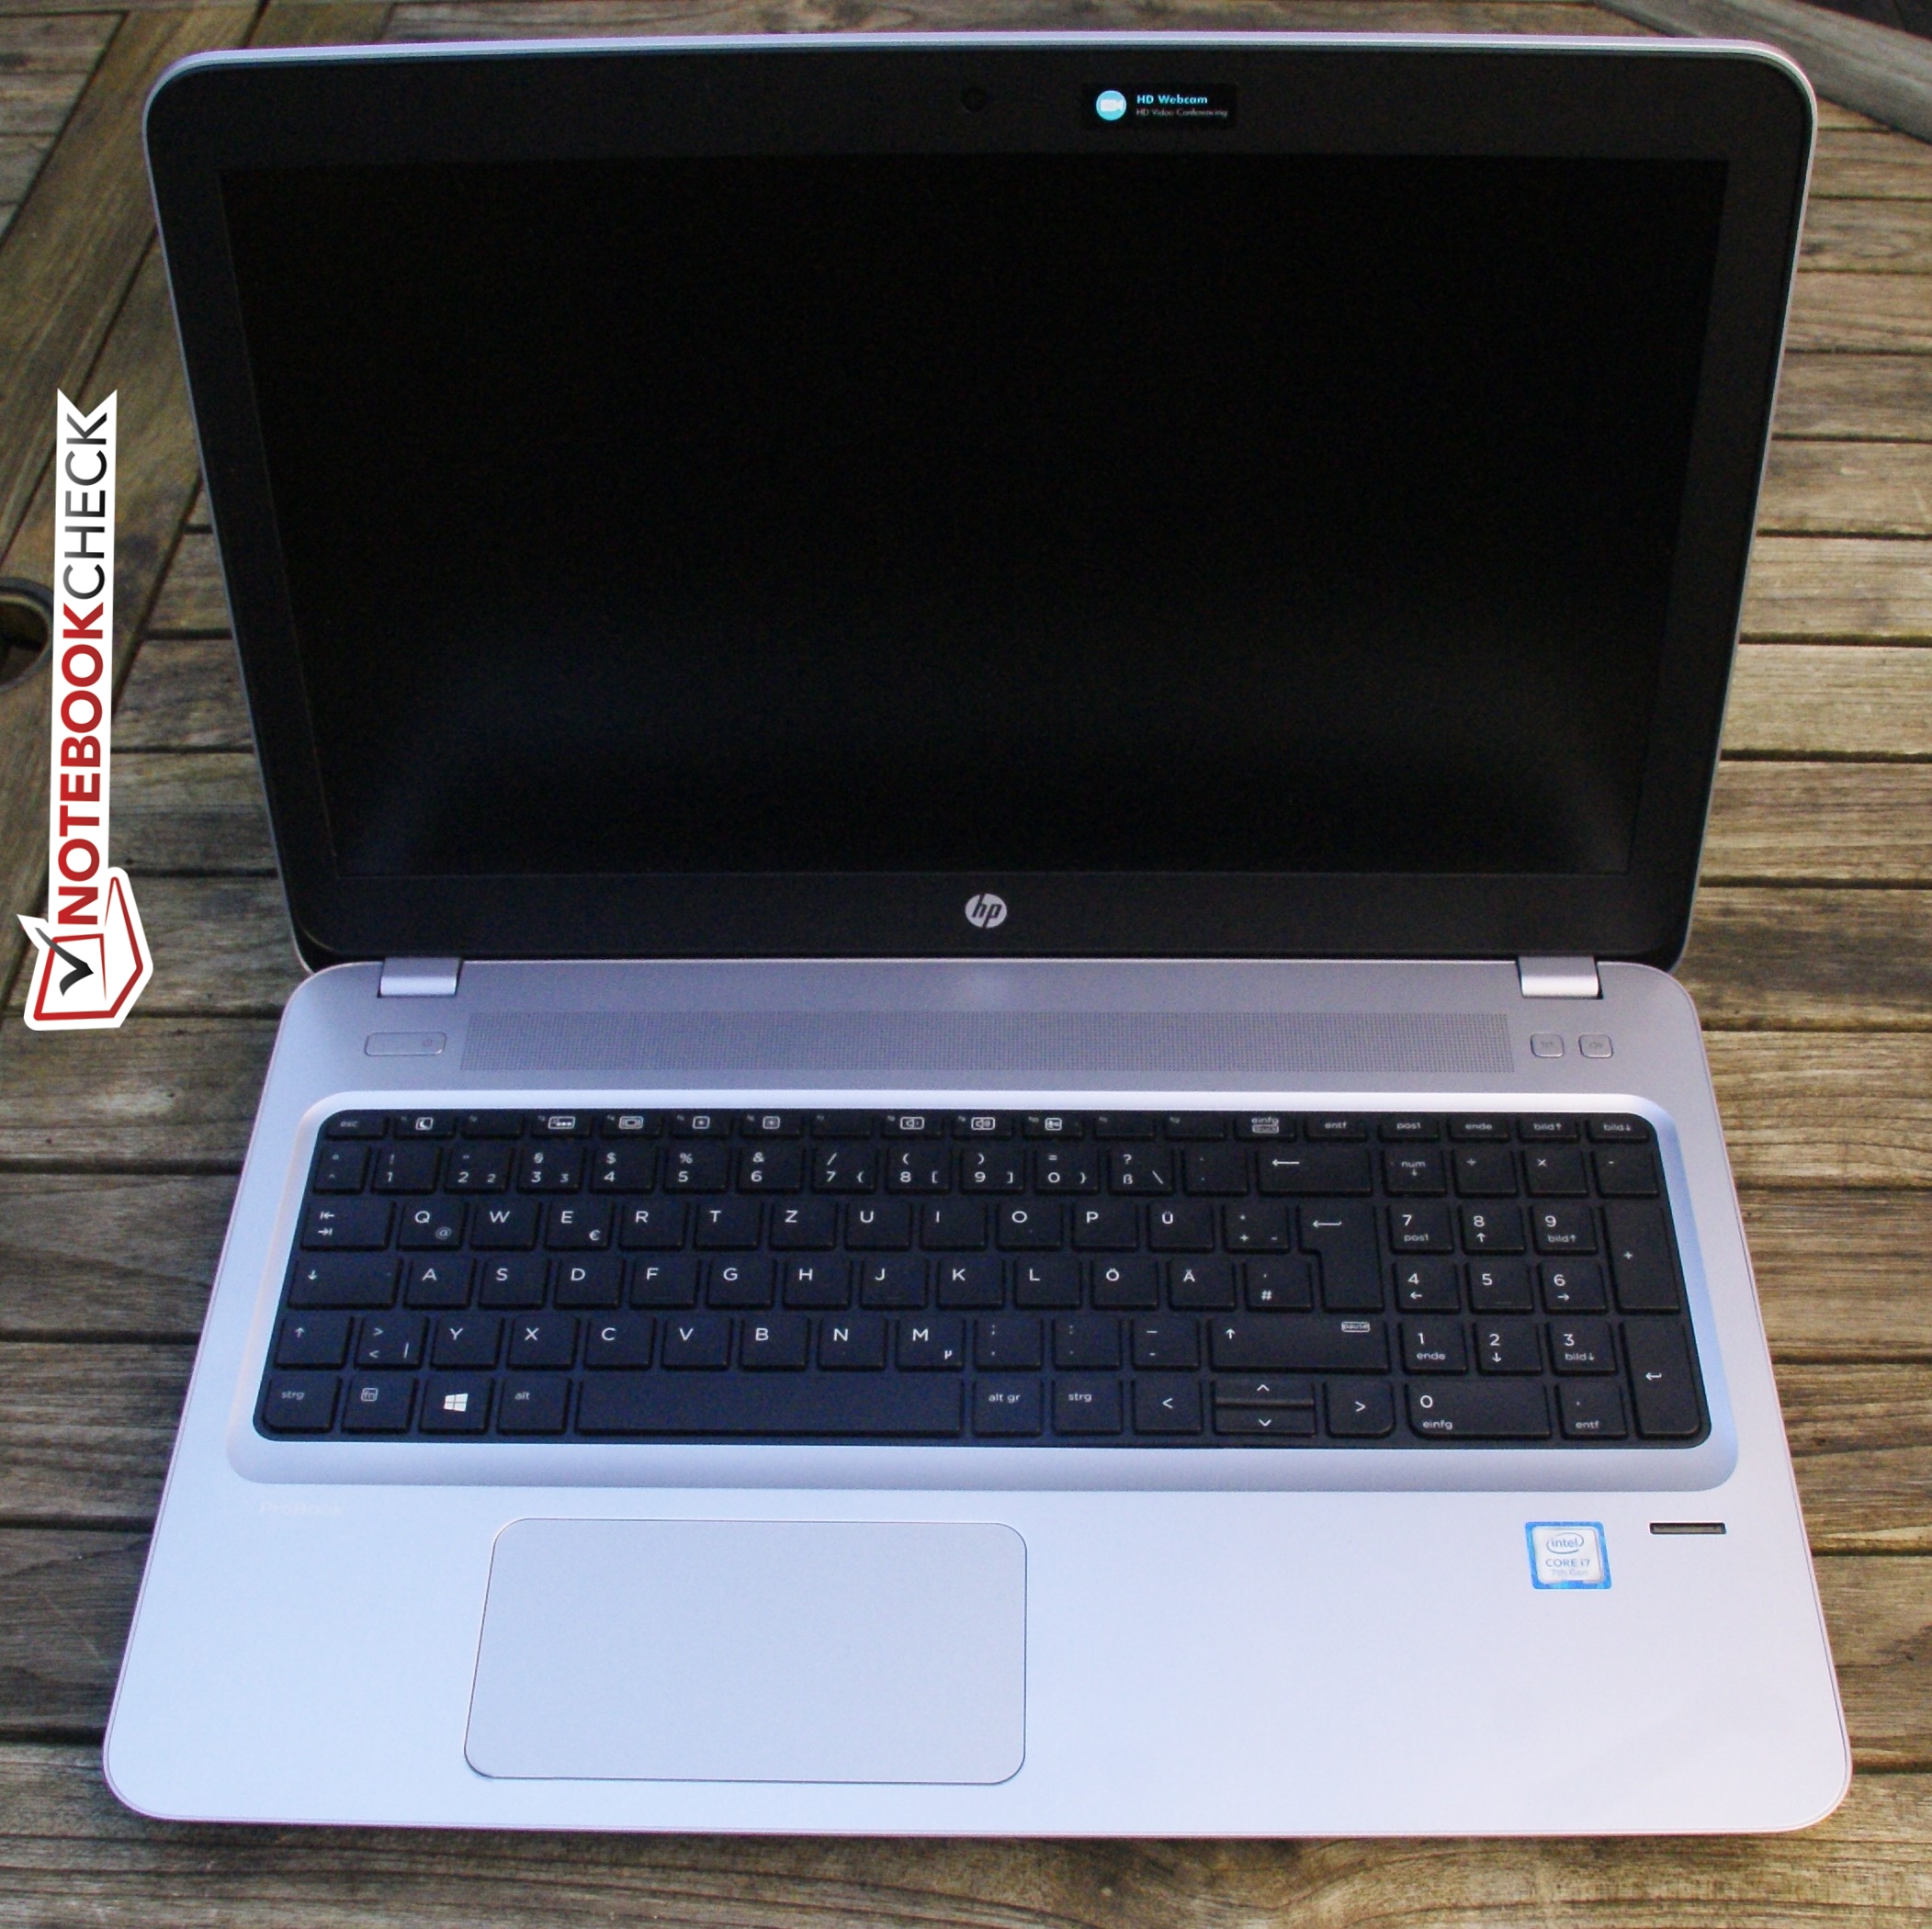 payment unit Brilliant HP ProBook 450 G4 Y8B60EA Notebook Review - NotebookCheck.net Reviews